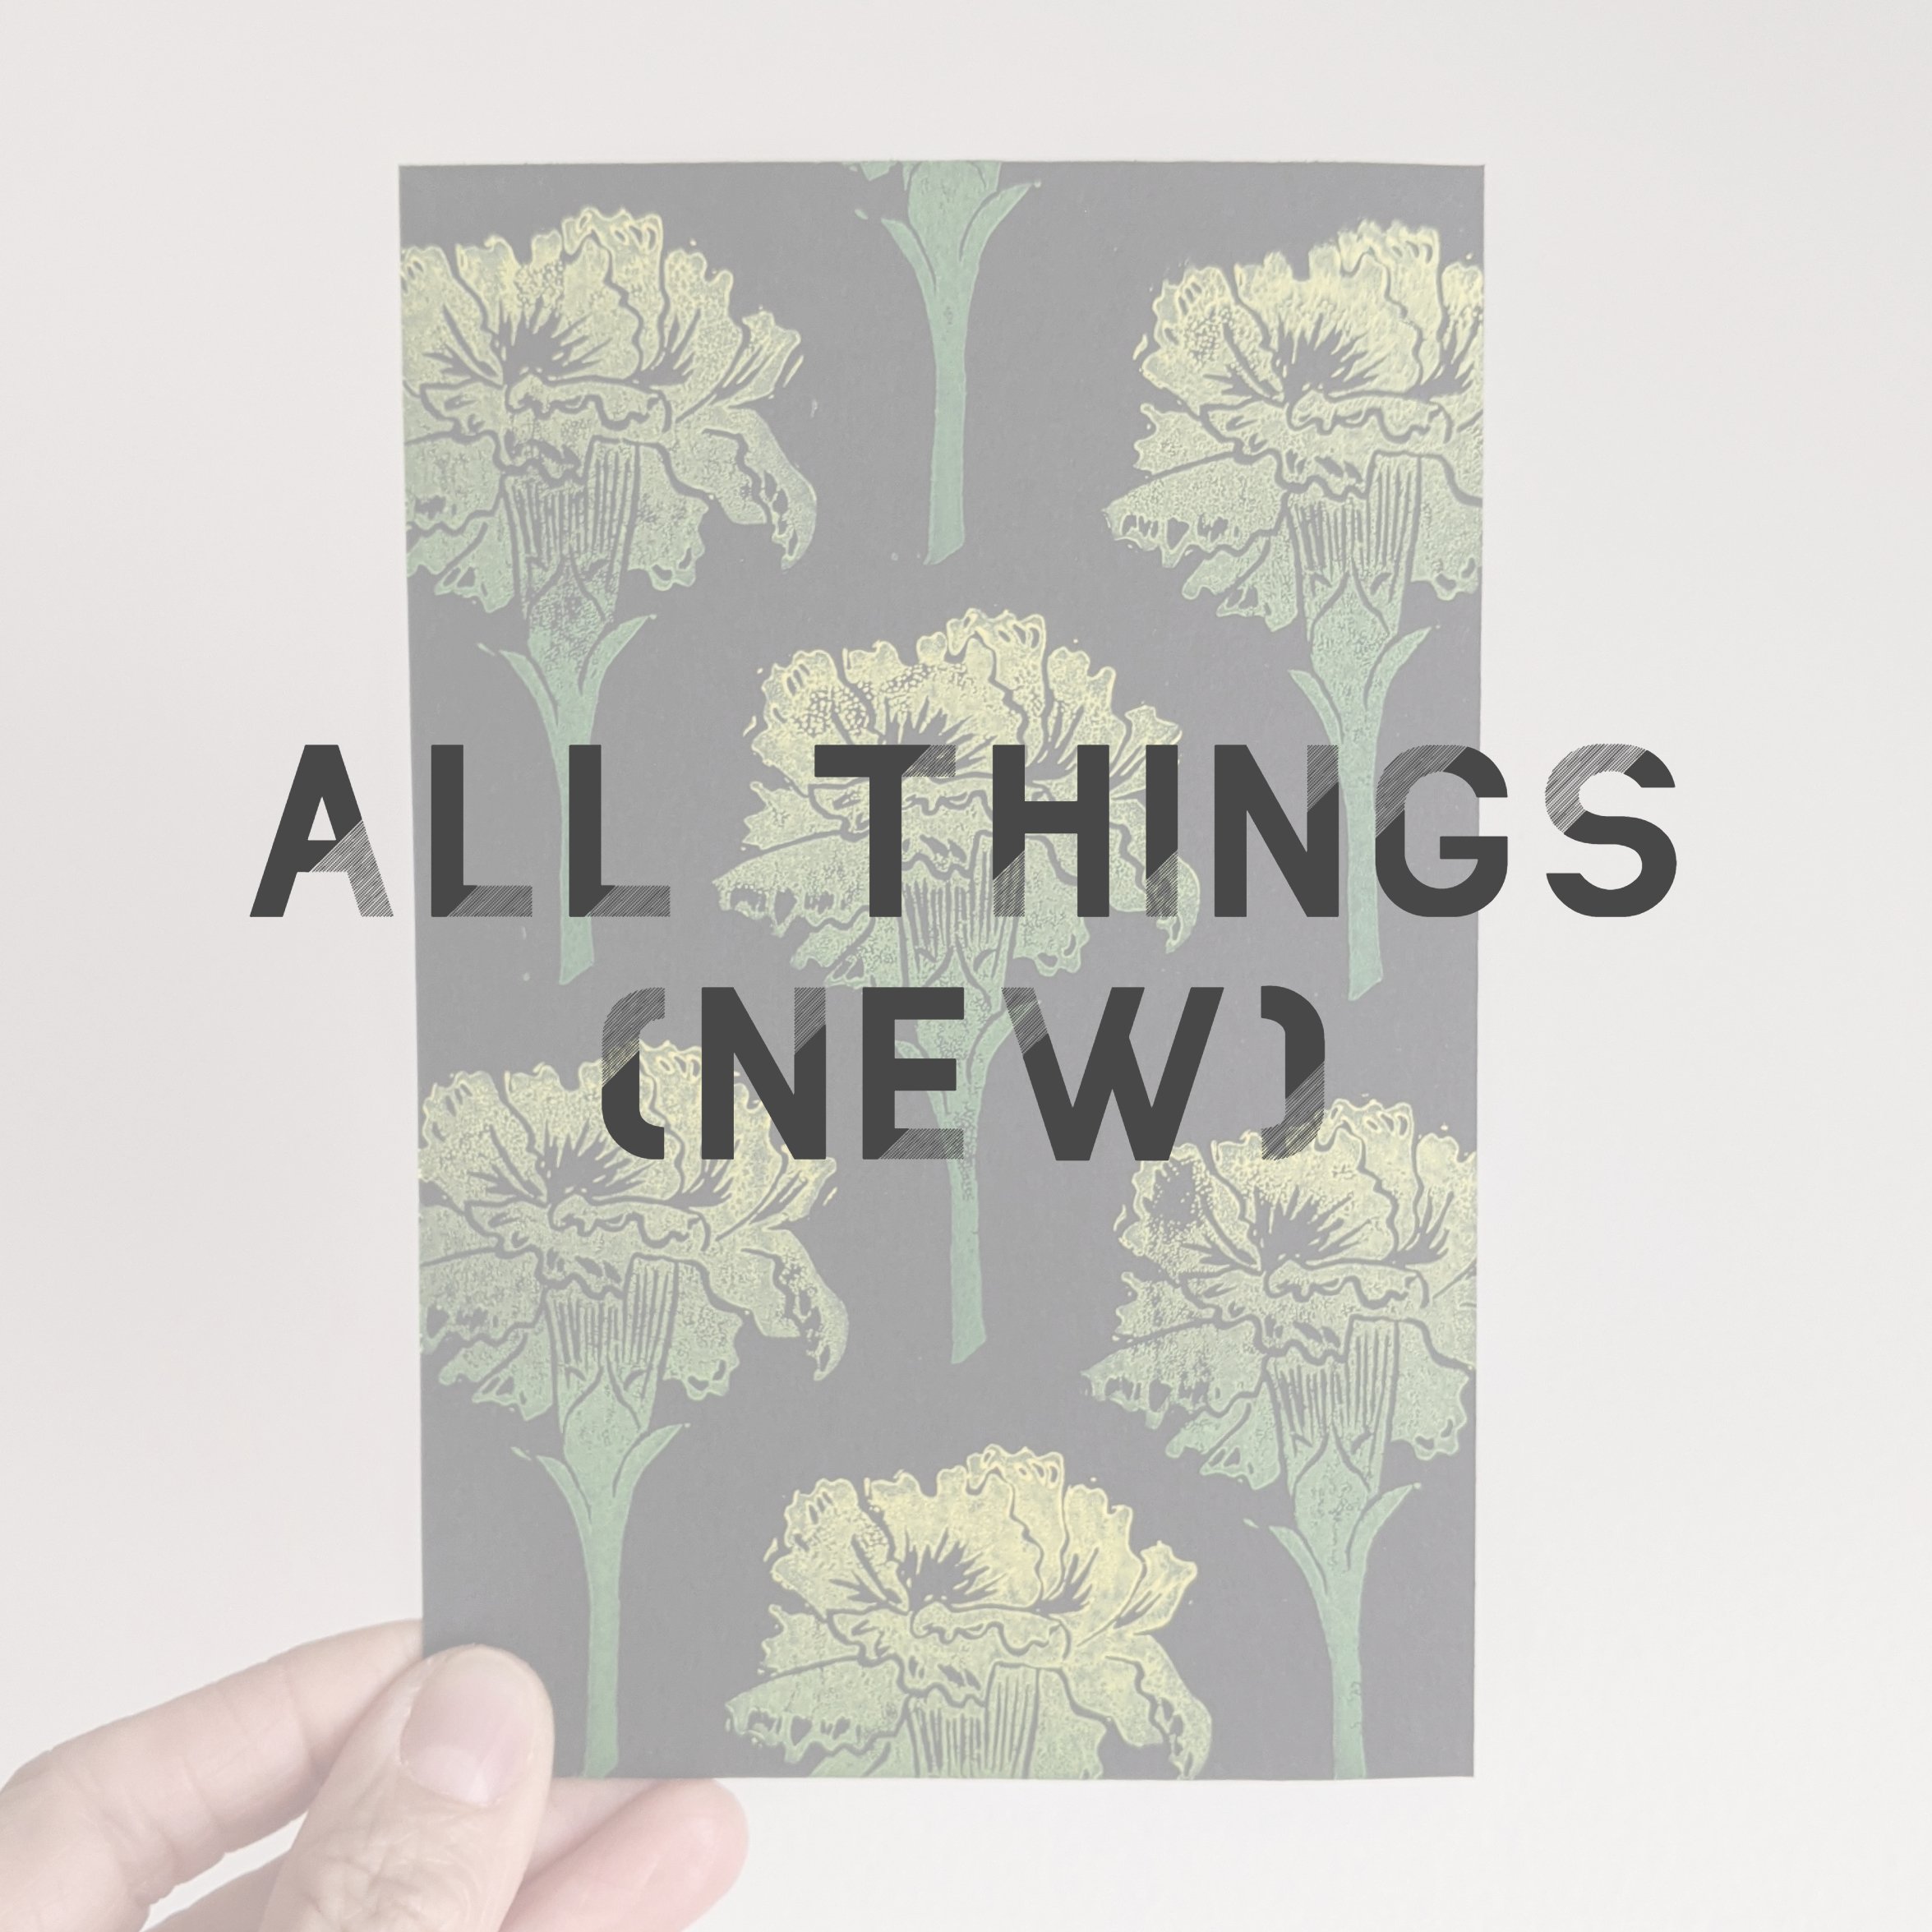 All things (new).jpg